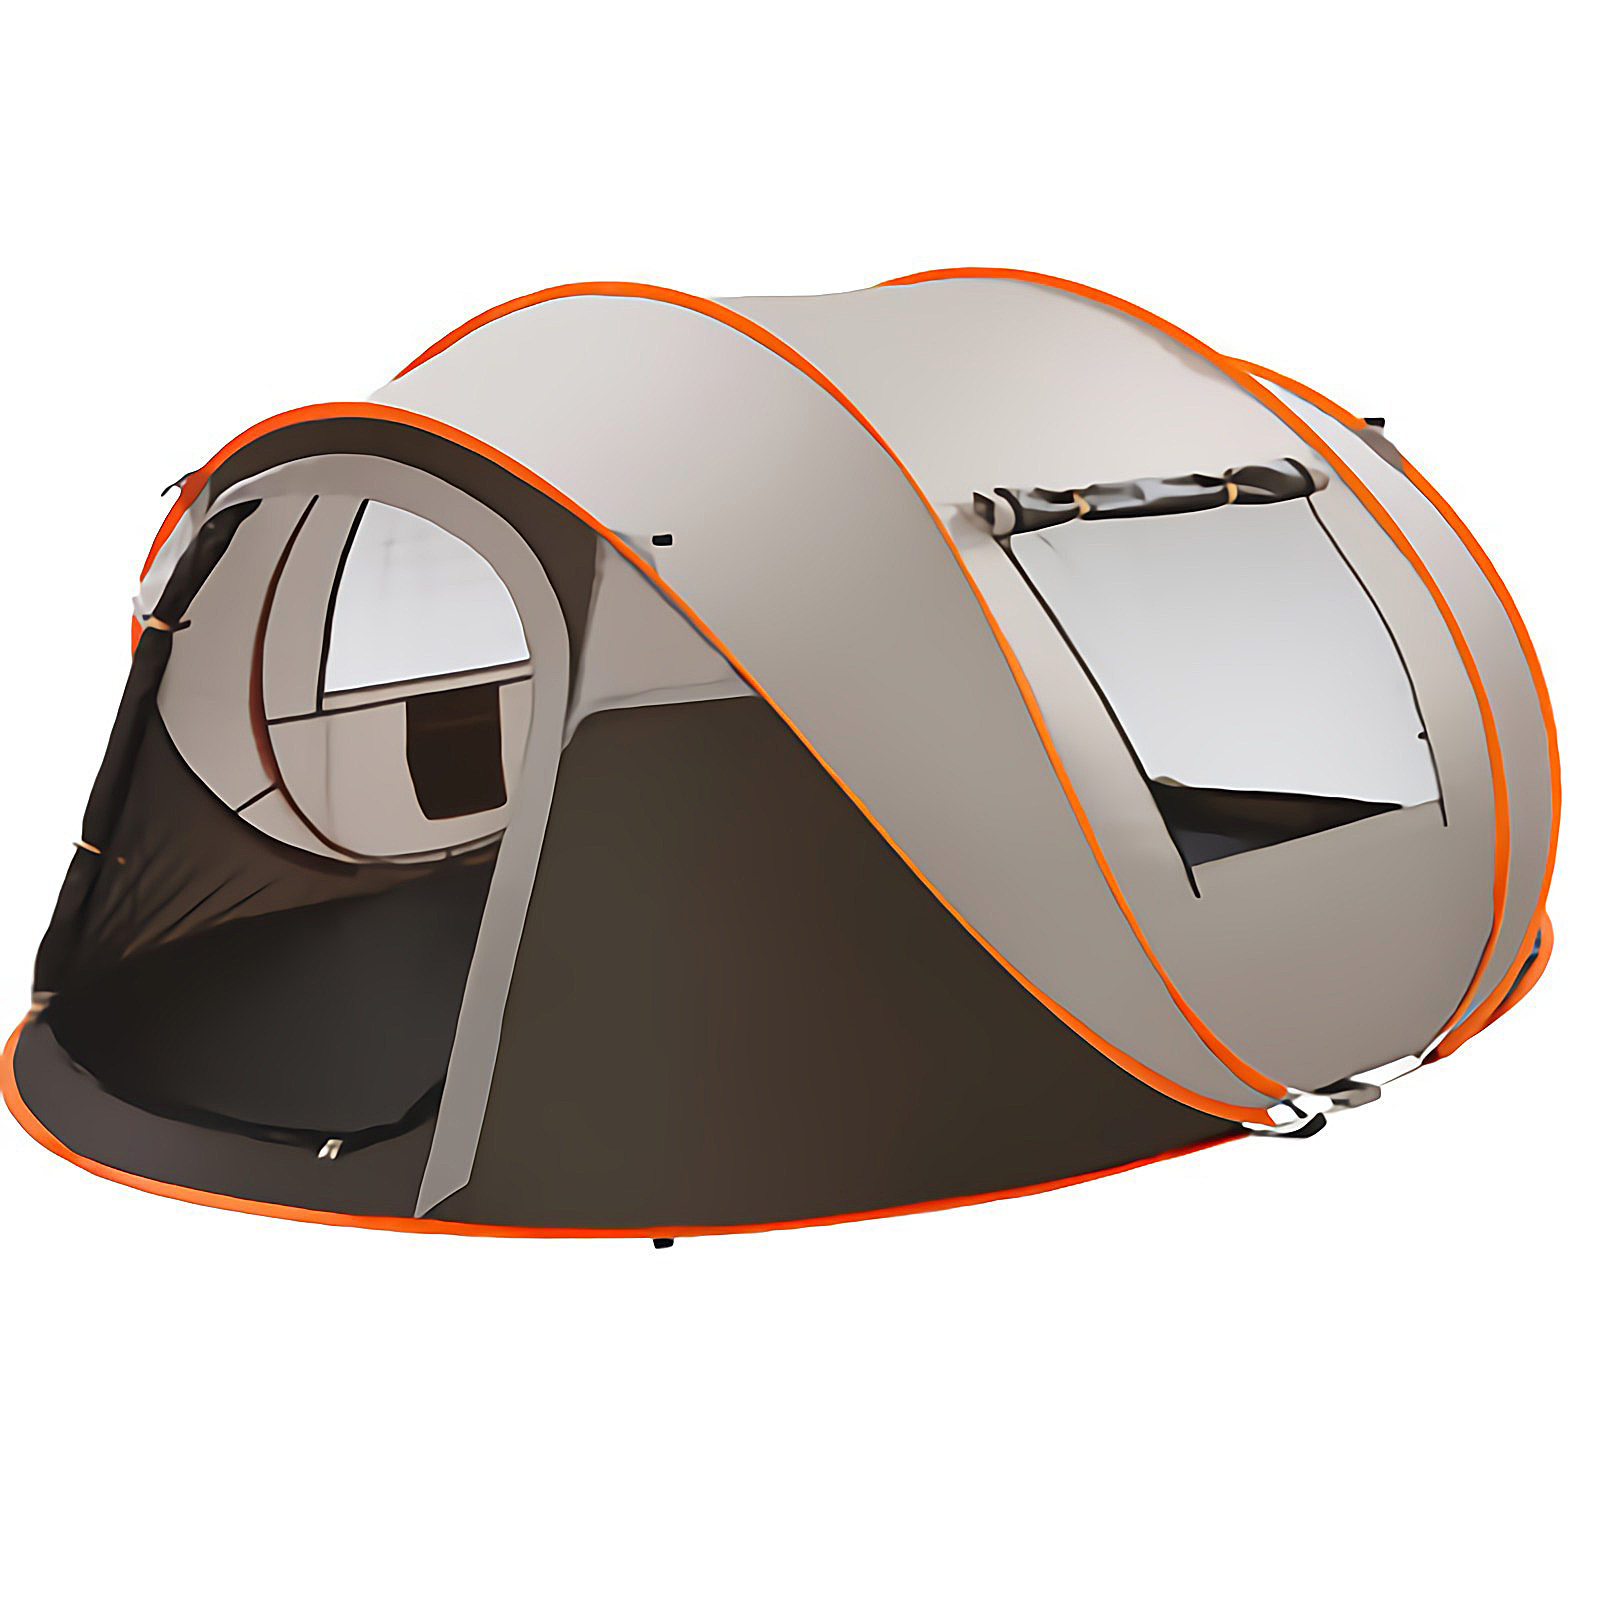 Tents & Tent Accessories